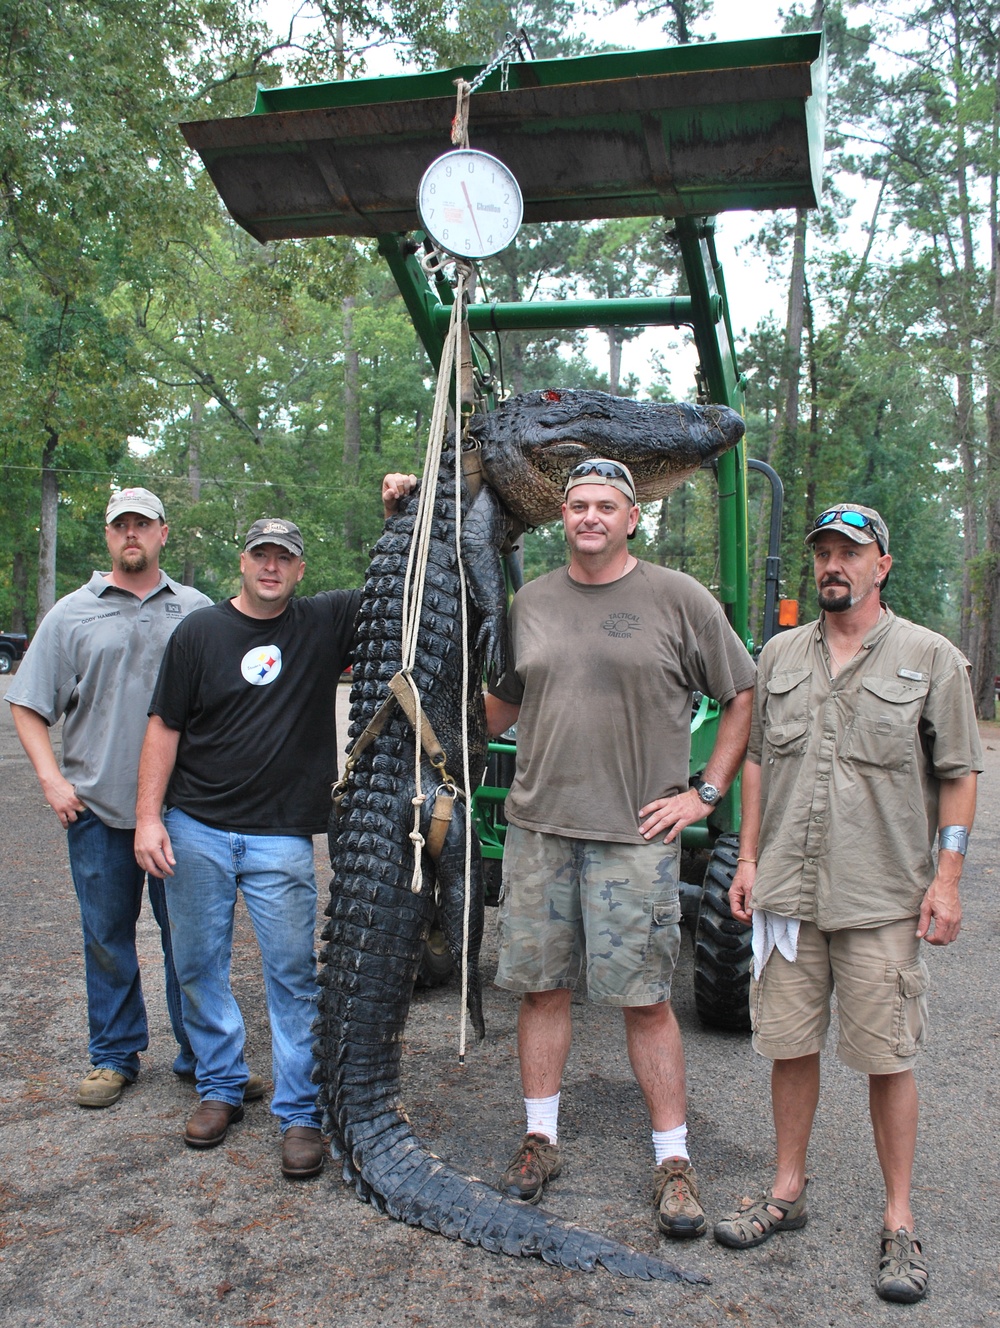 Warrior hunt at BA Steinhagen Lake nets monster gator for recovering soldiers, veterans